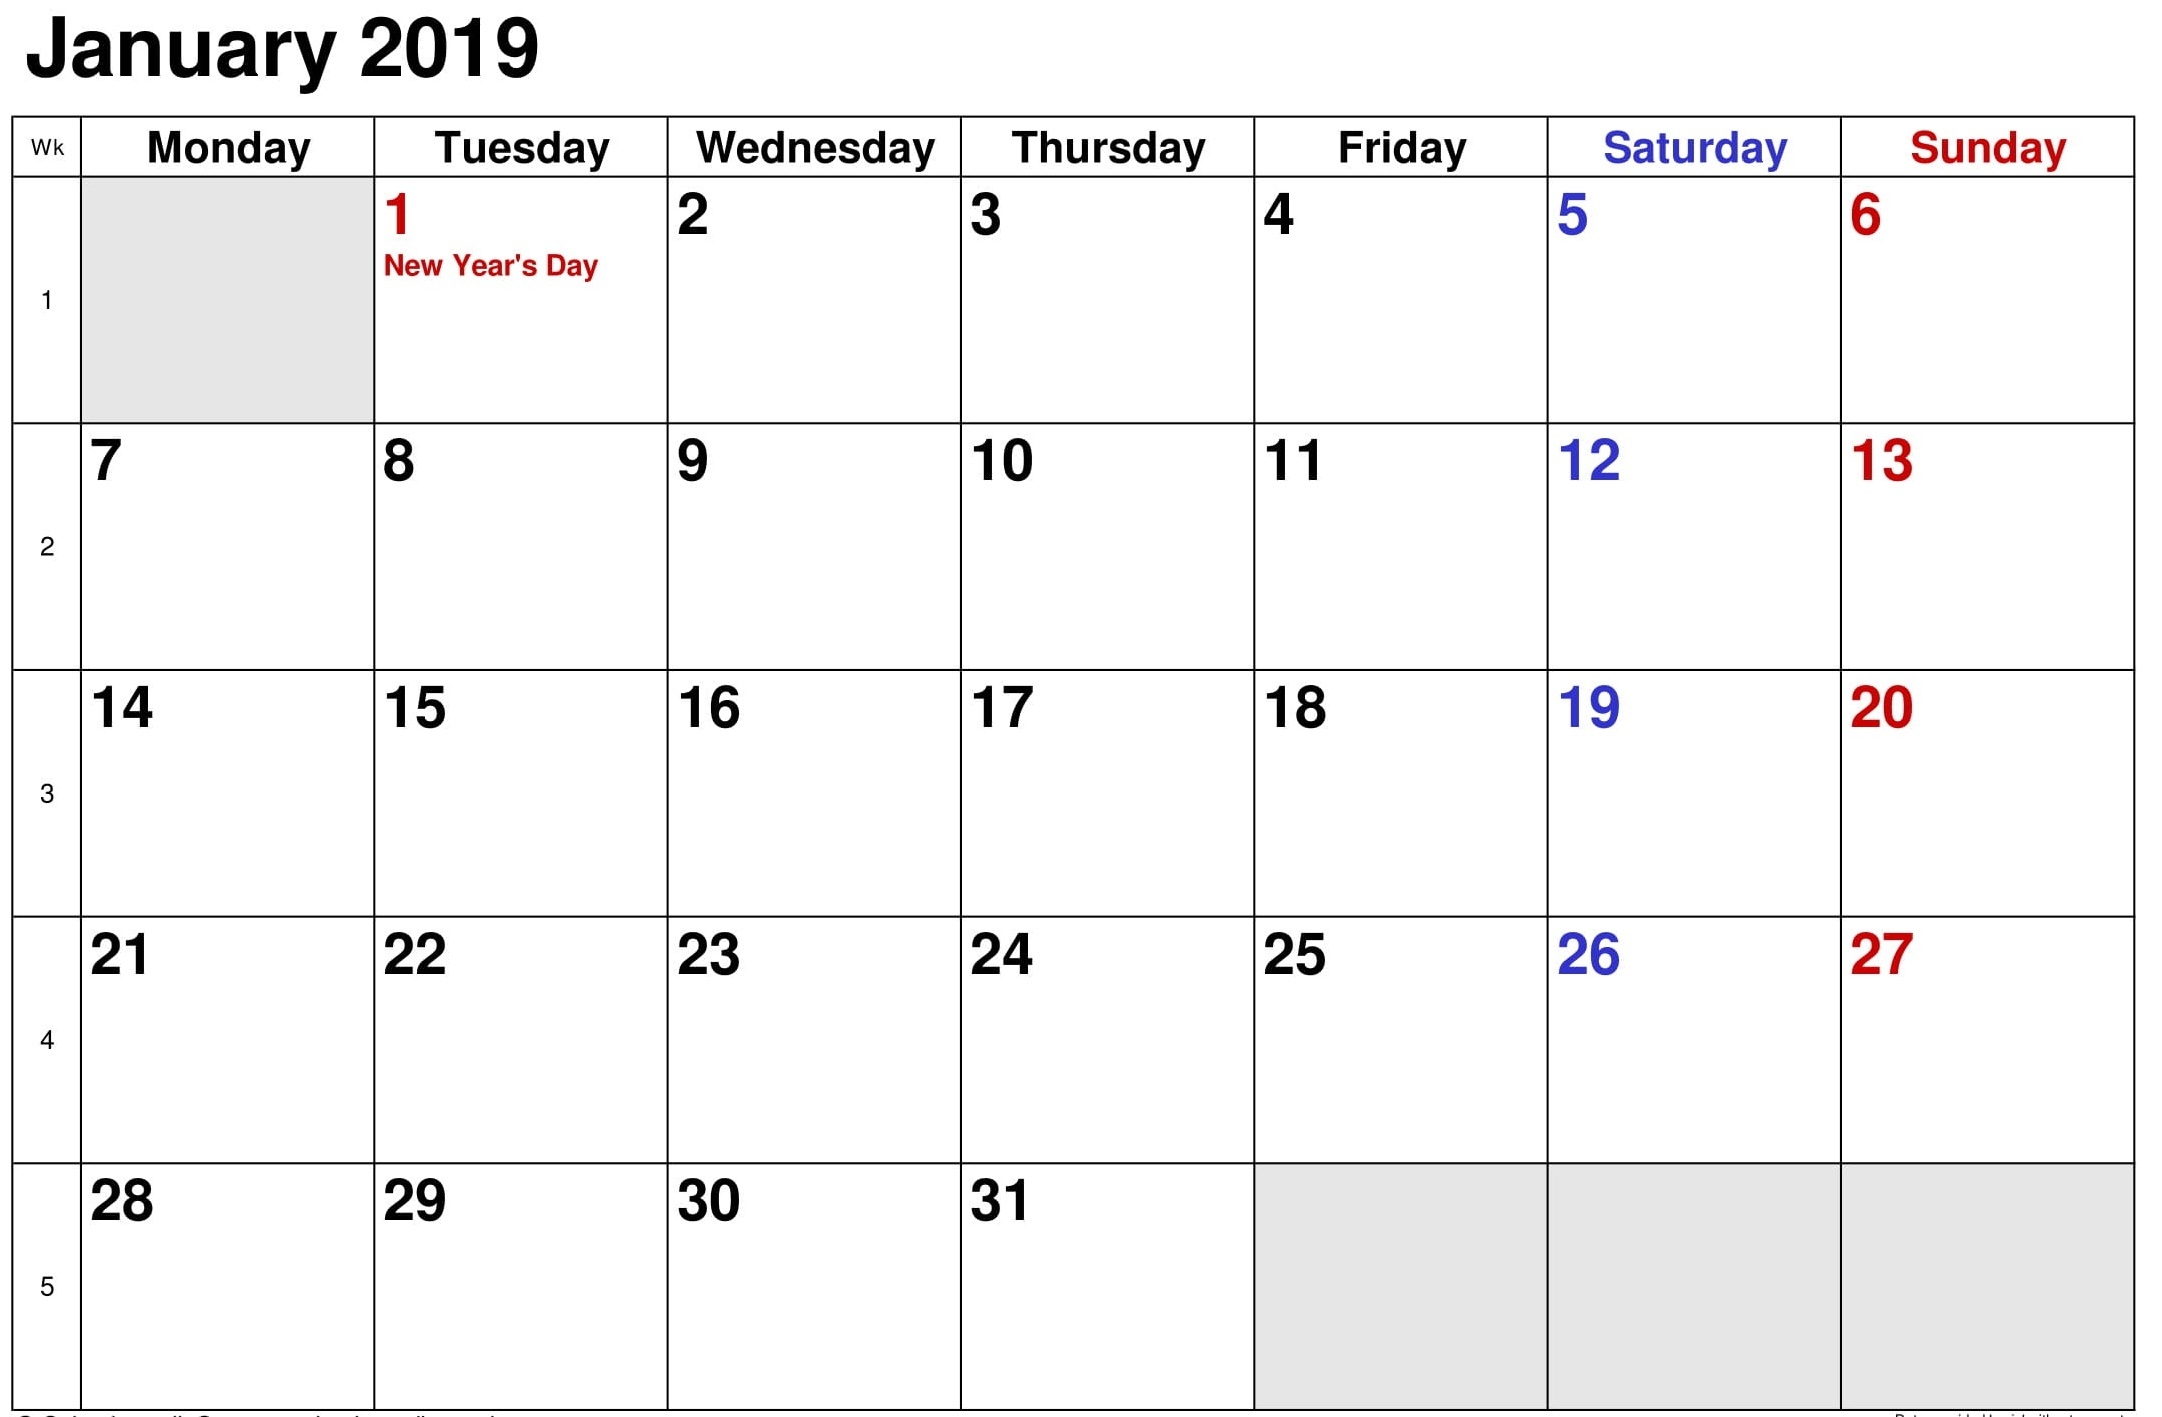 January 2019 Calendar Holidays Free Image